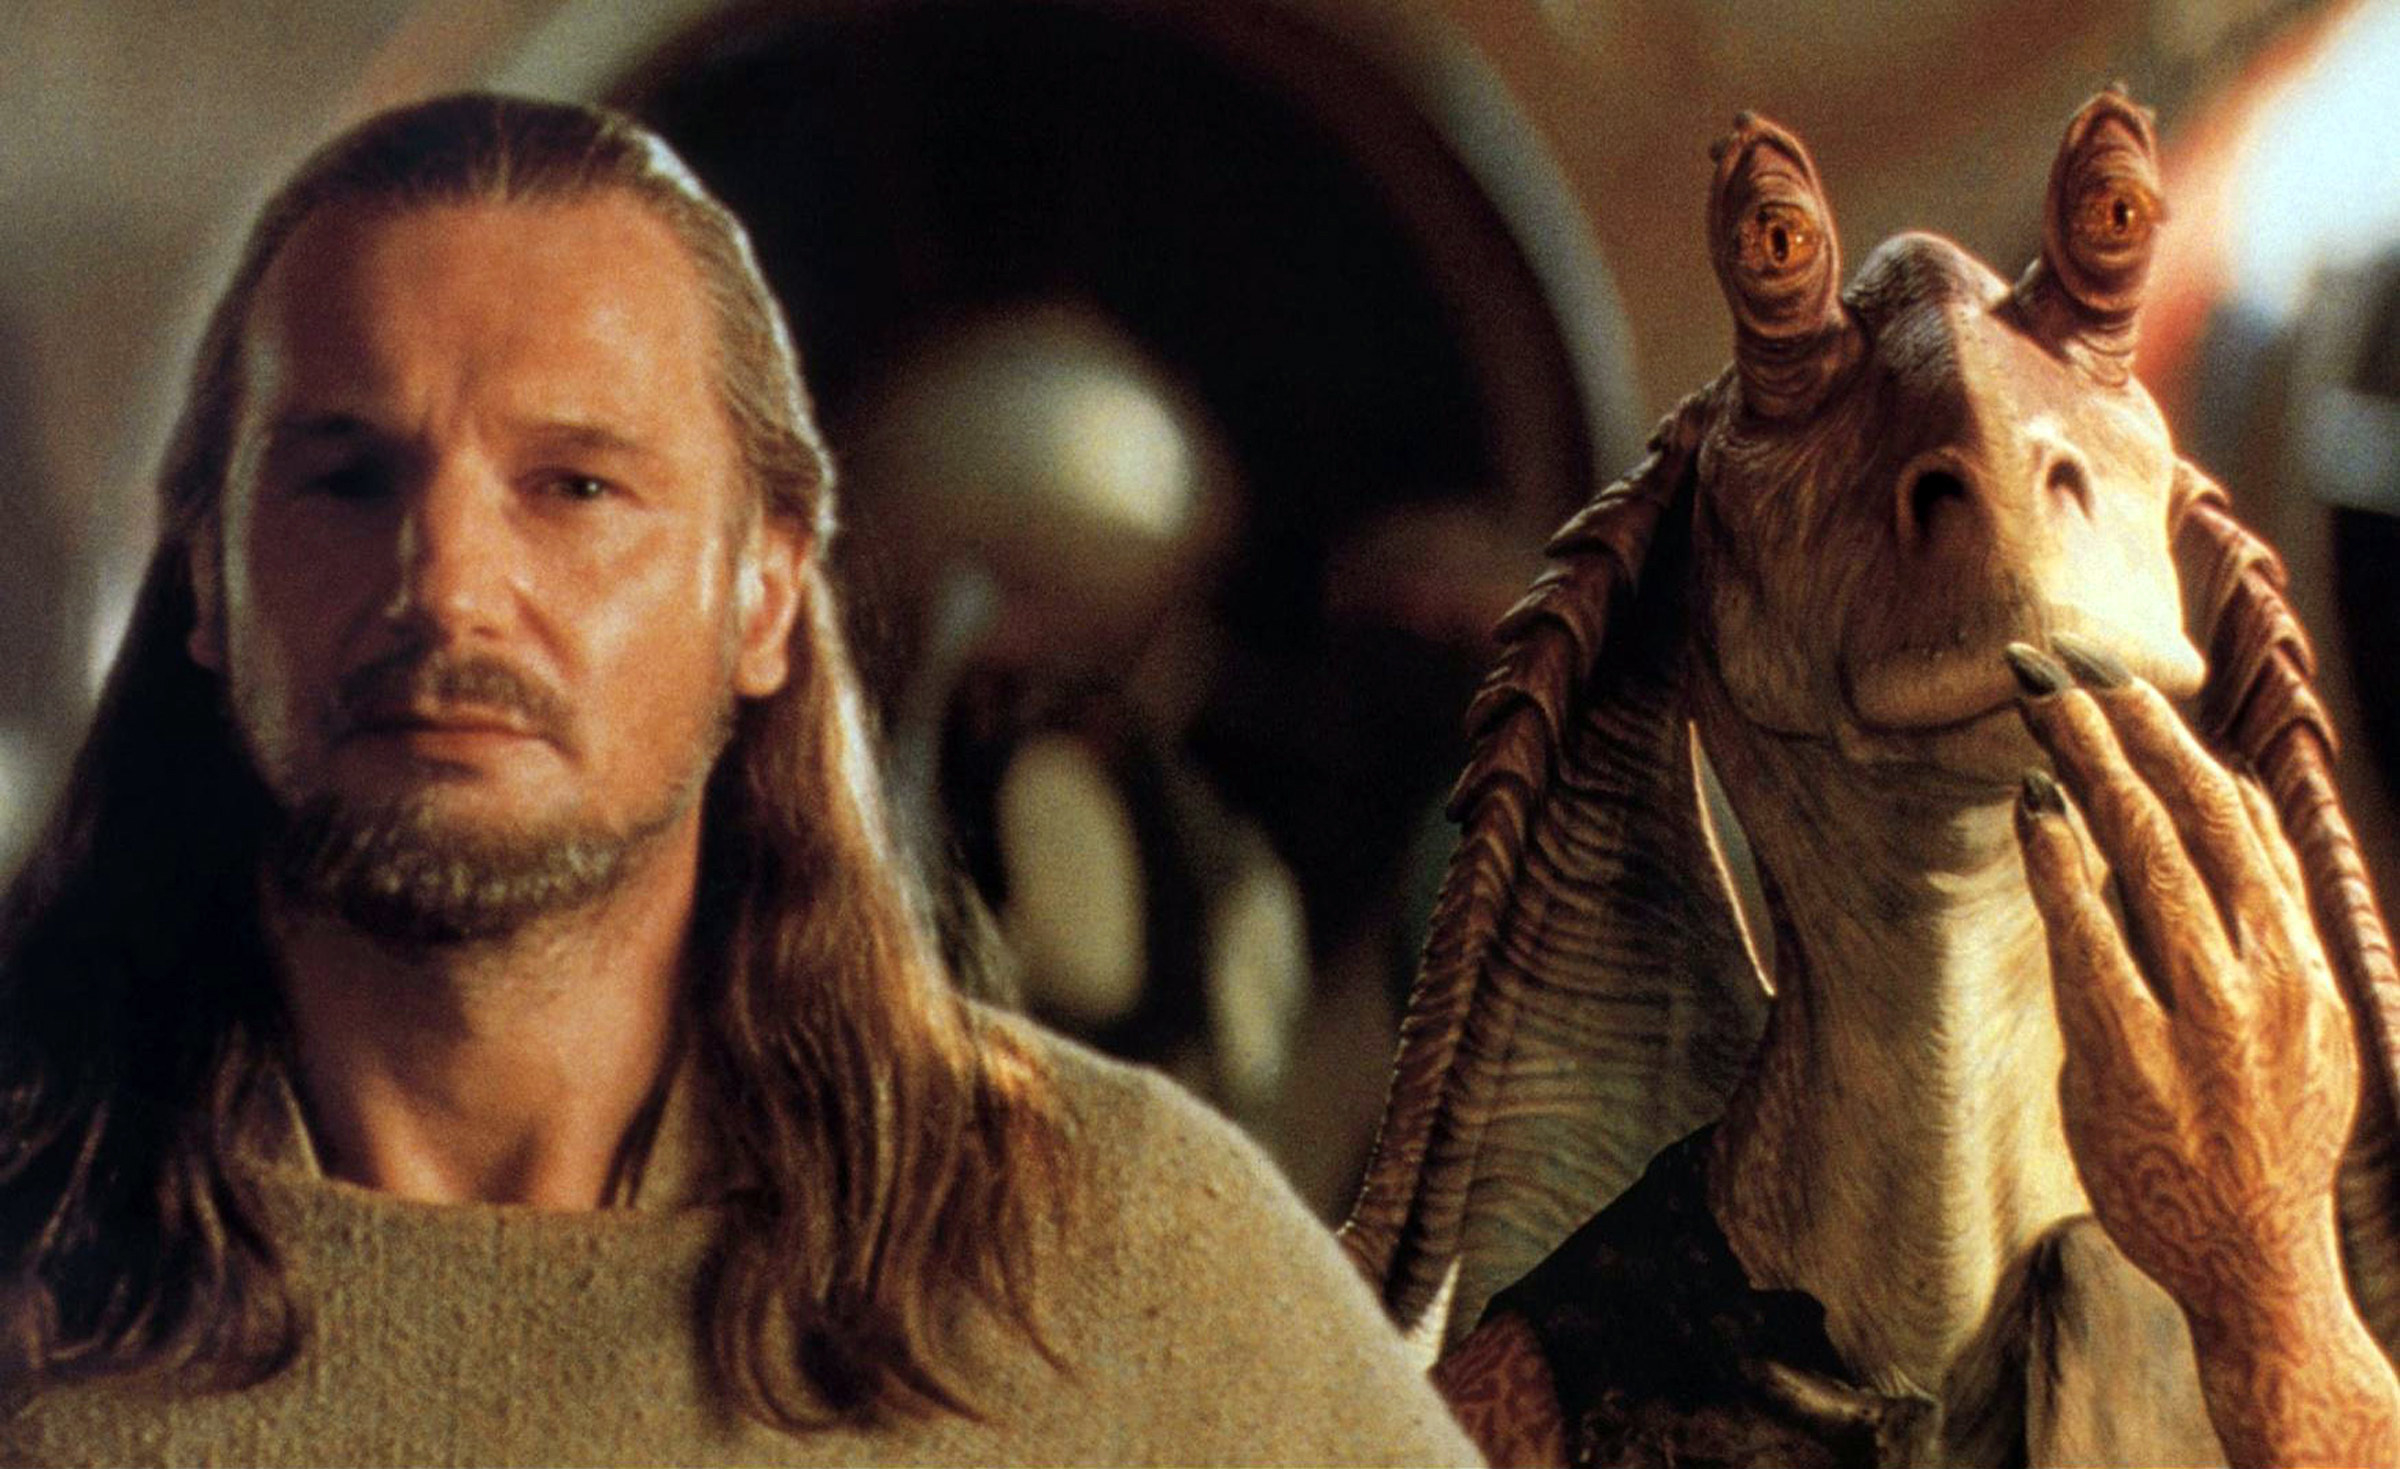 Liam Neeson as Qui-Gon Jinn standing next to Jar-Jar Binks in &quot;Star Wars, Episode I: The Phantom Menace&quot;